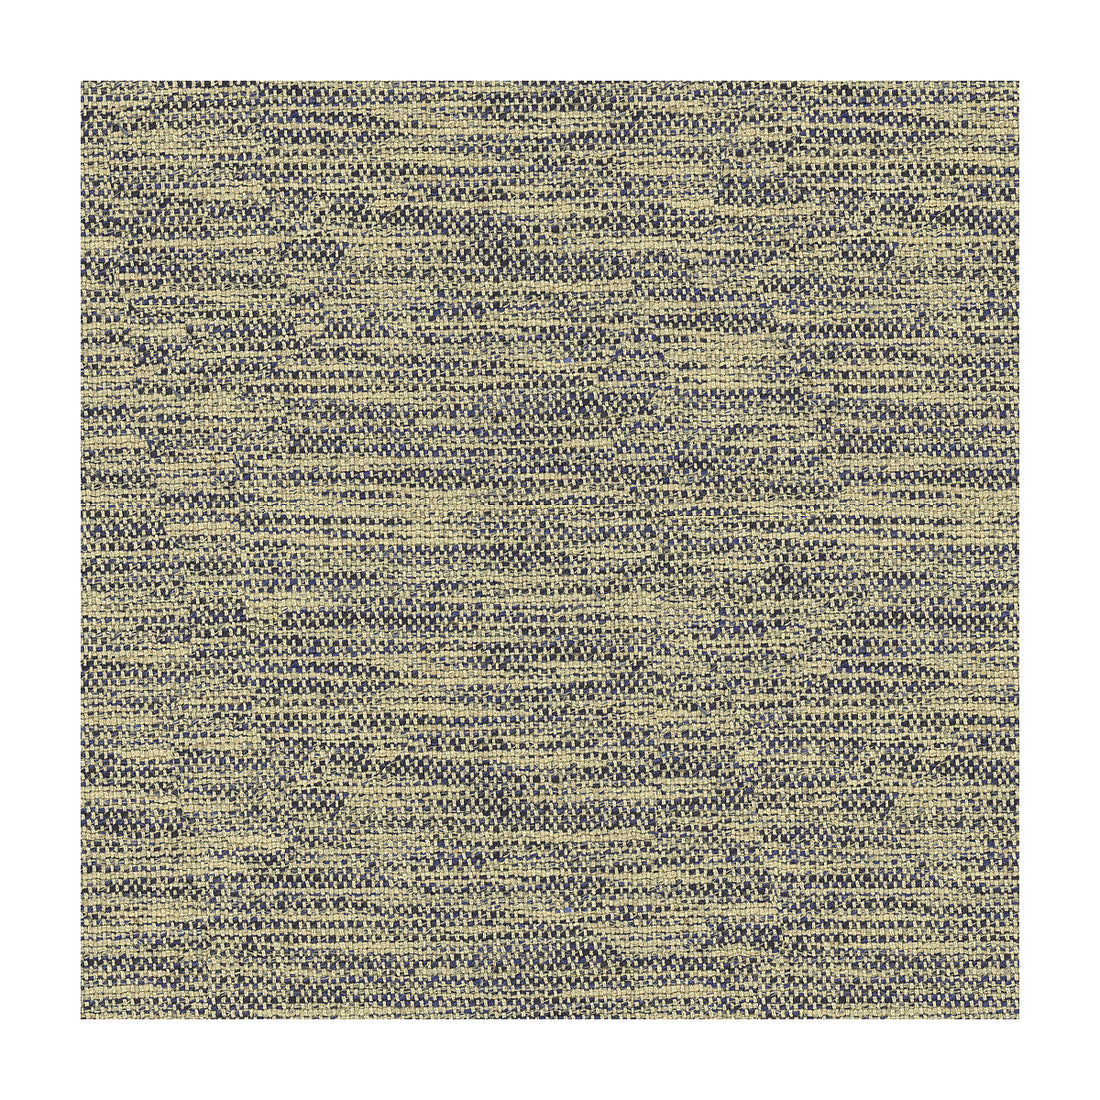 Kravet Design fabric in 34109-516 color - pattern 34109.516.0 - by Kravet Design in the Indigo collection